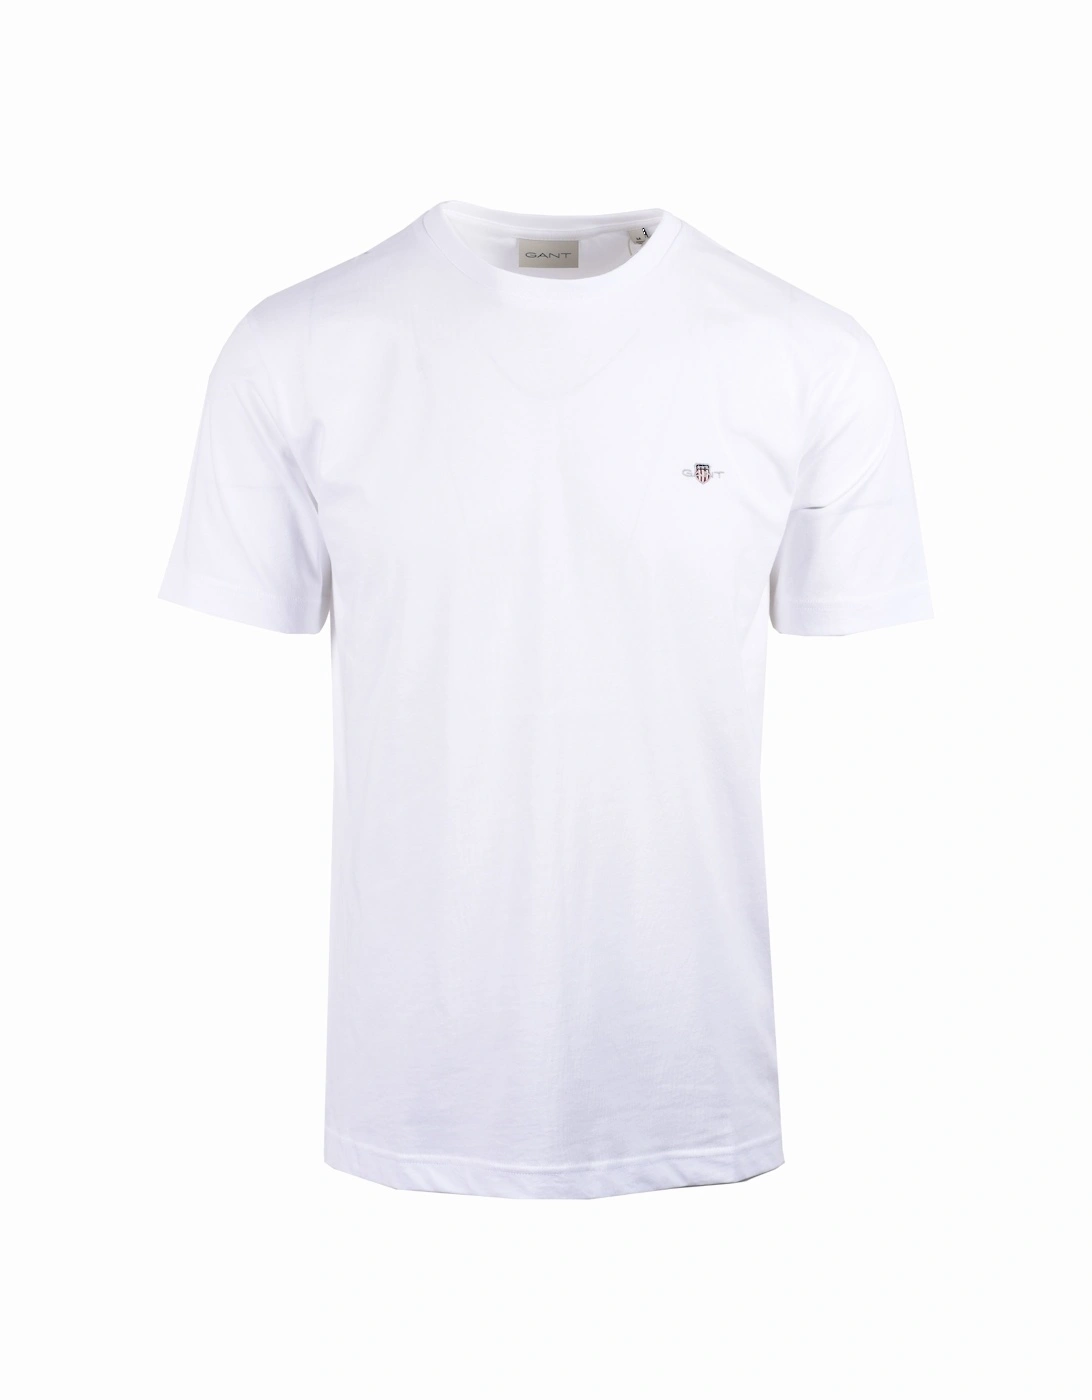 Reg Shield Ss T-shirt White, 4 of 3